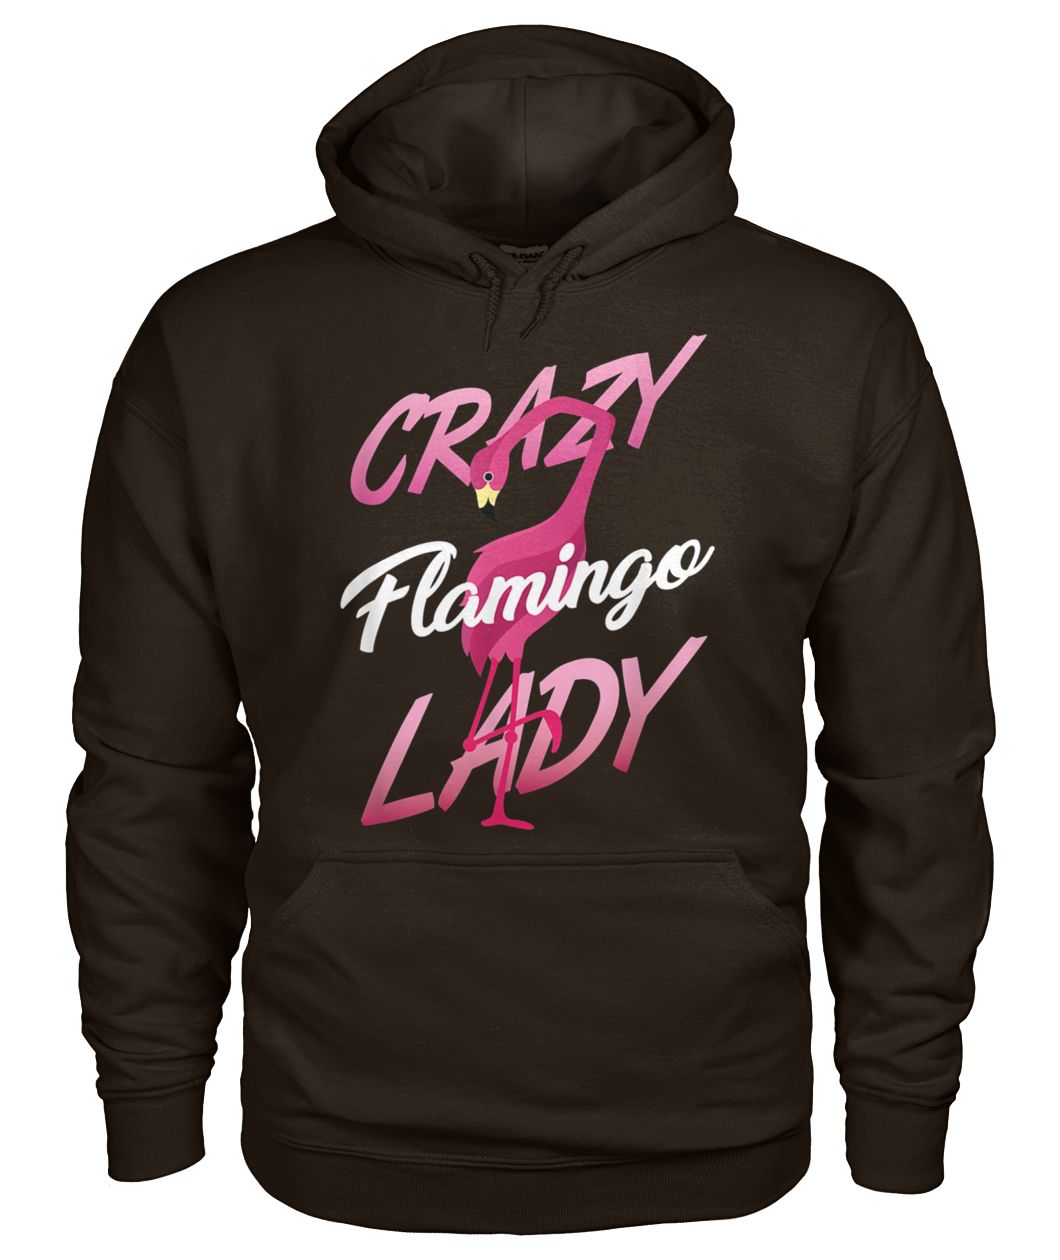 Crazy flamingo lady gildan hoodie